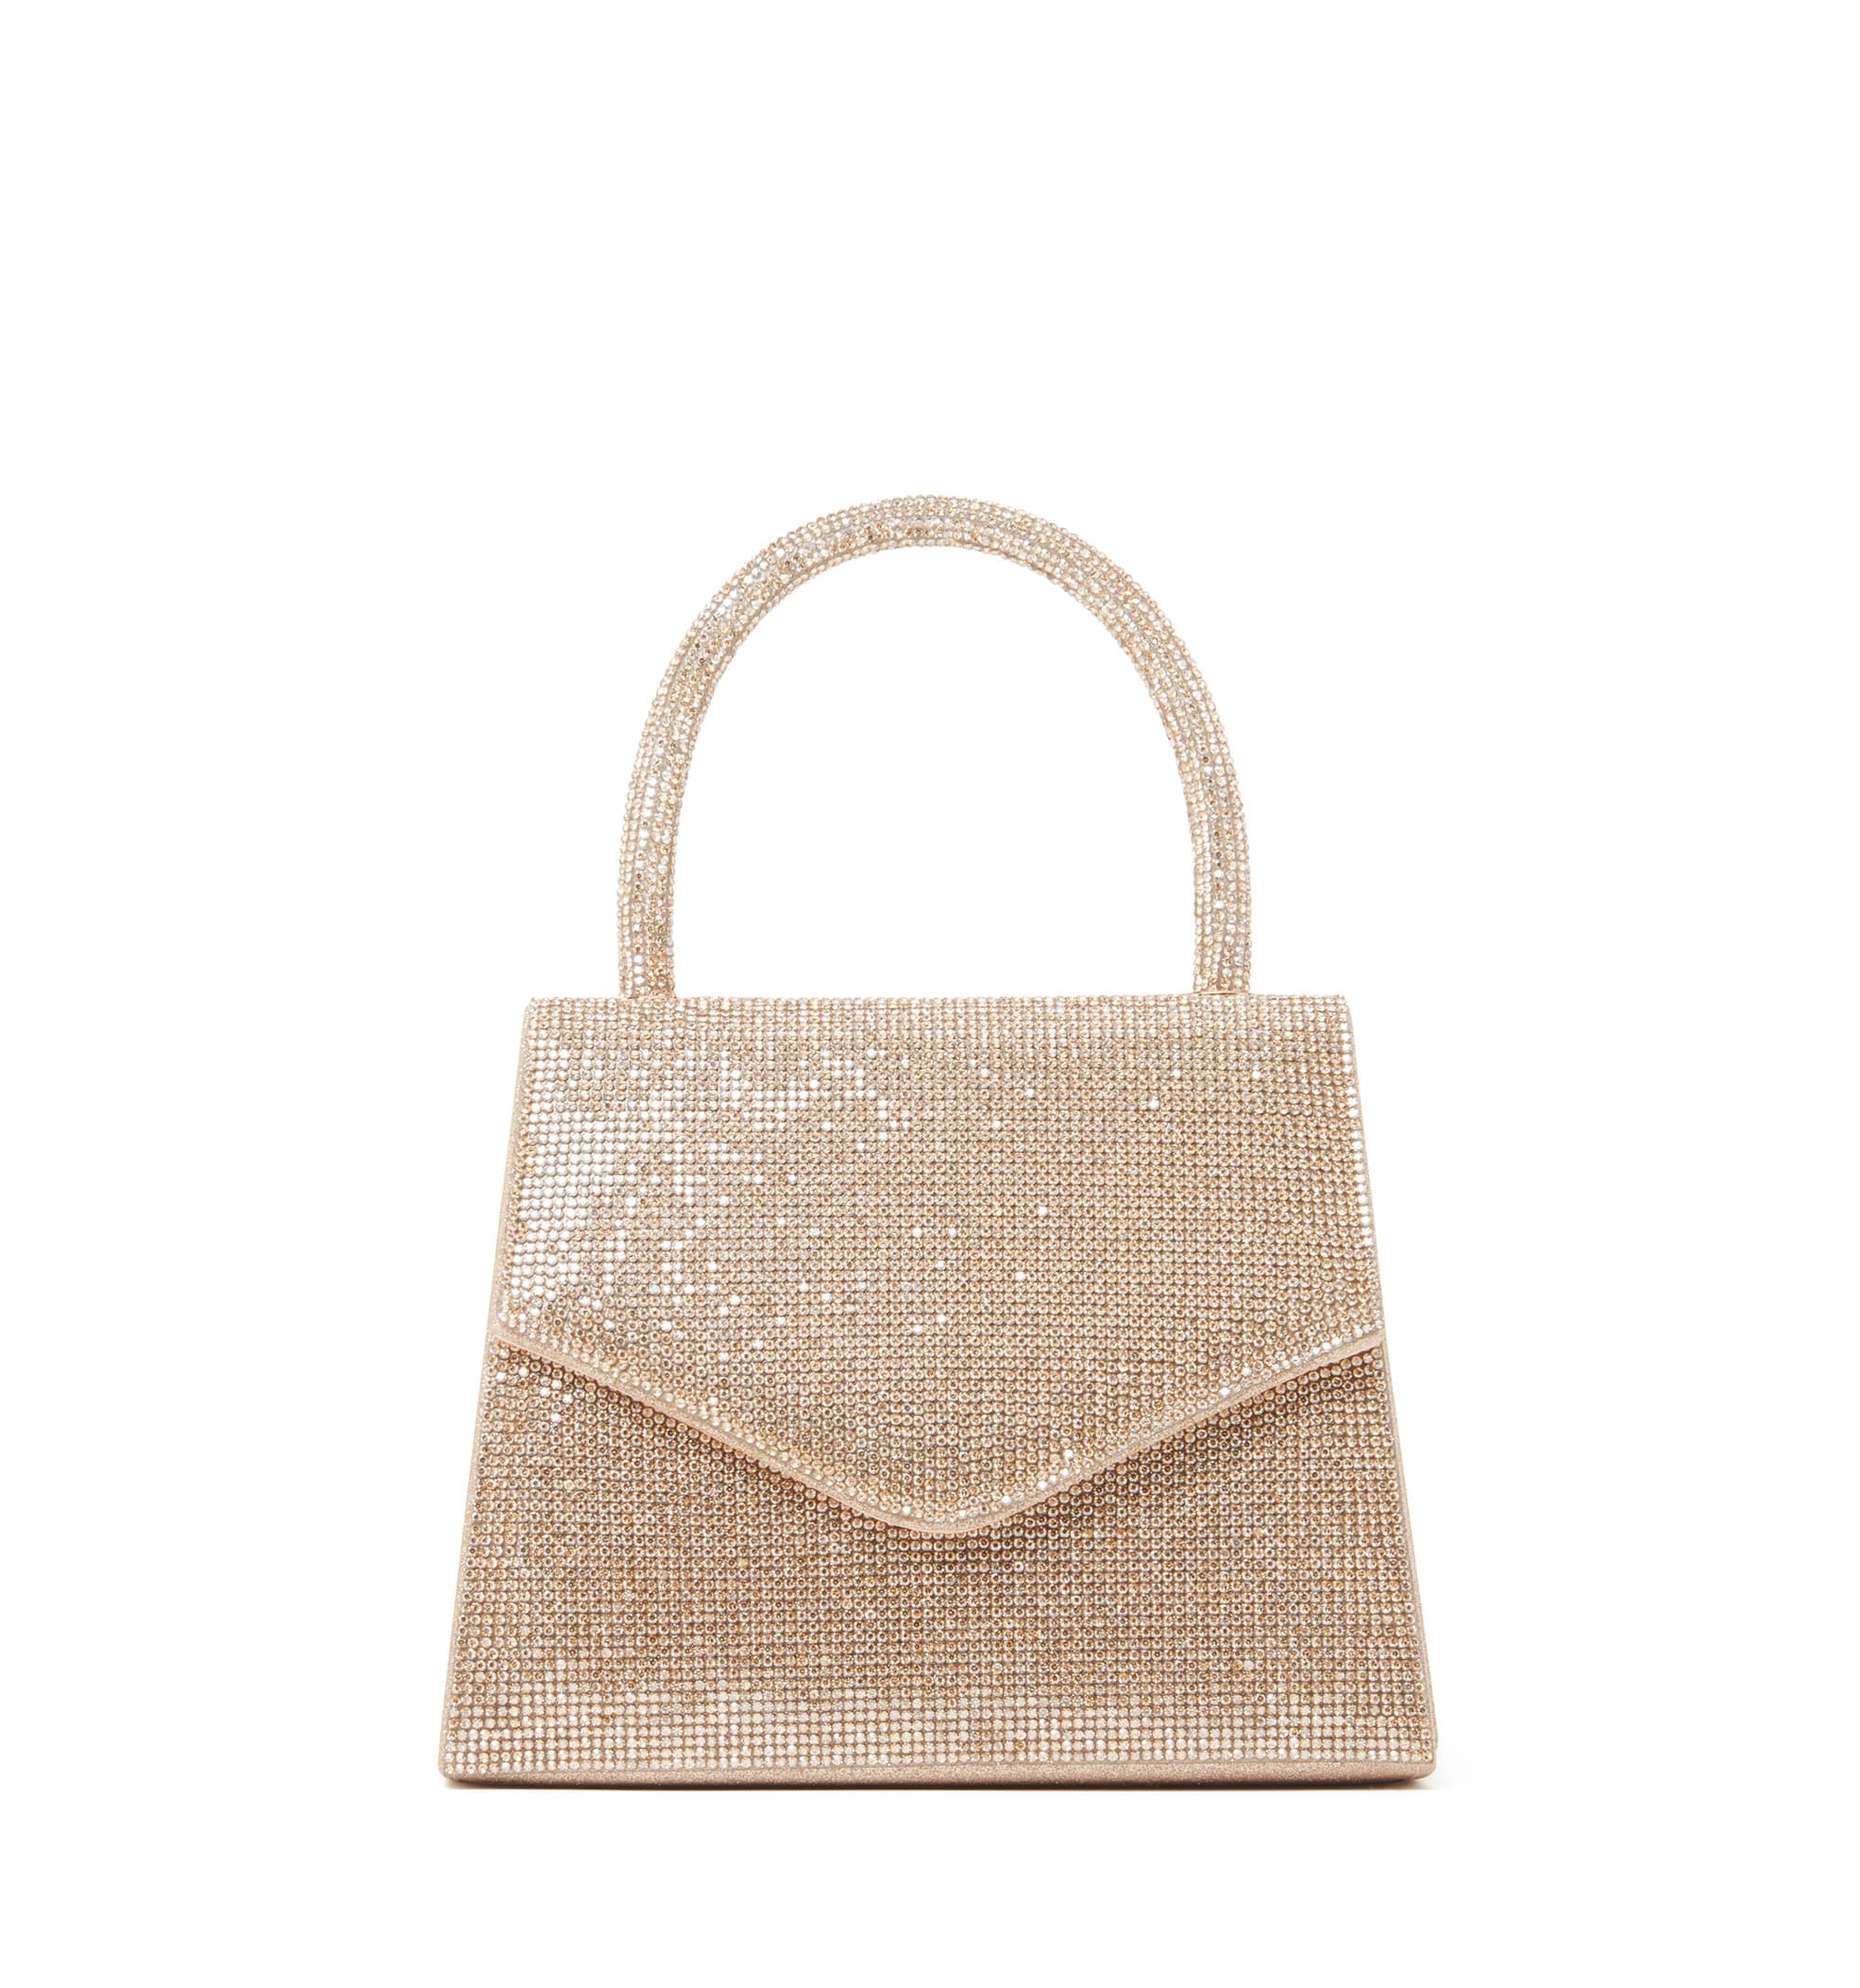 Forever New embellished clutch bag in gold